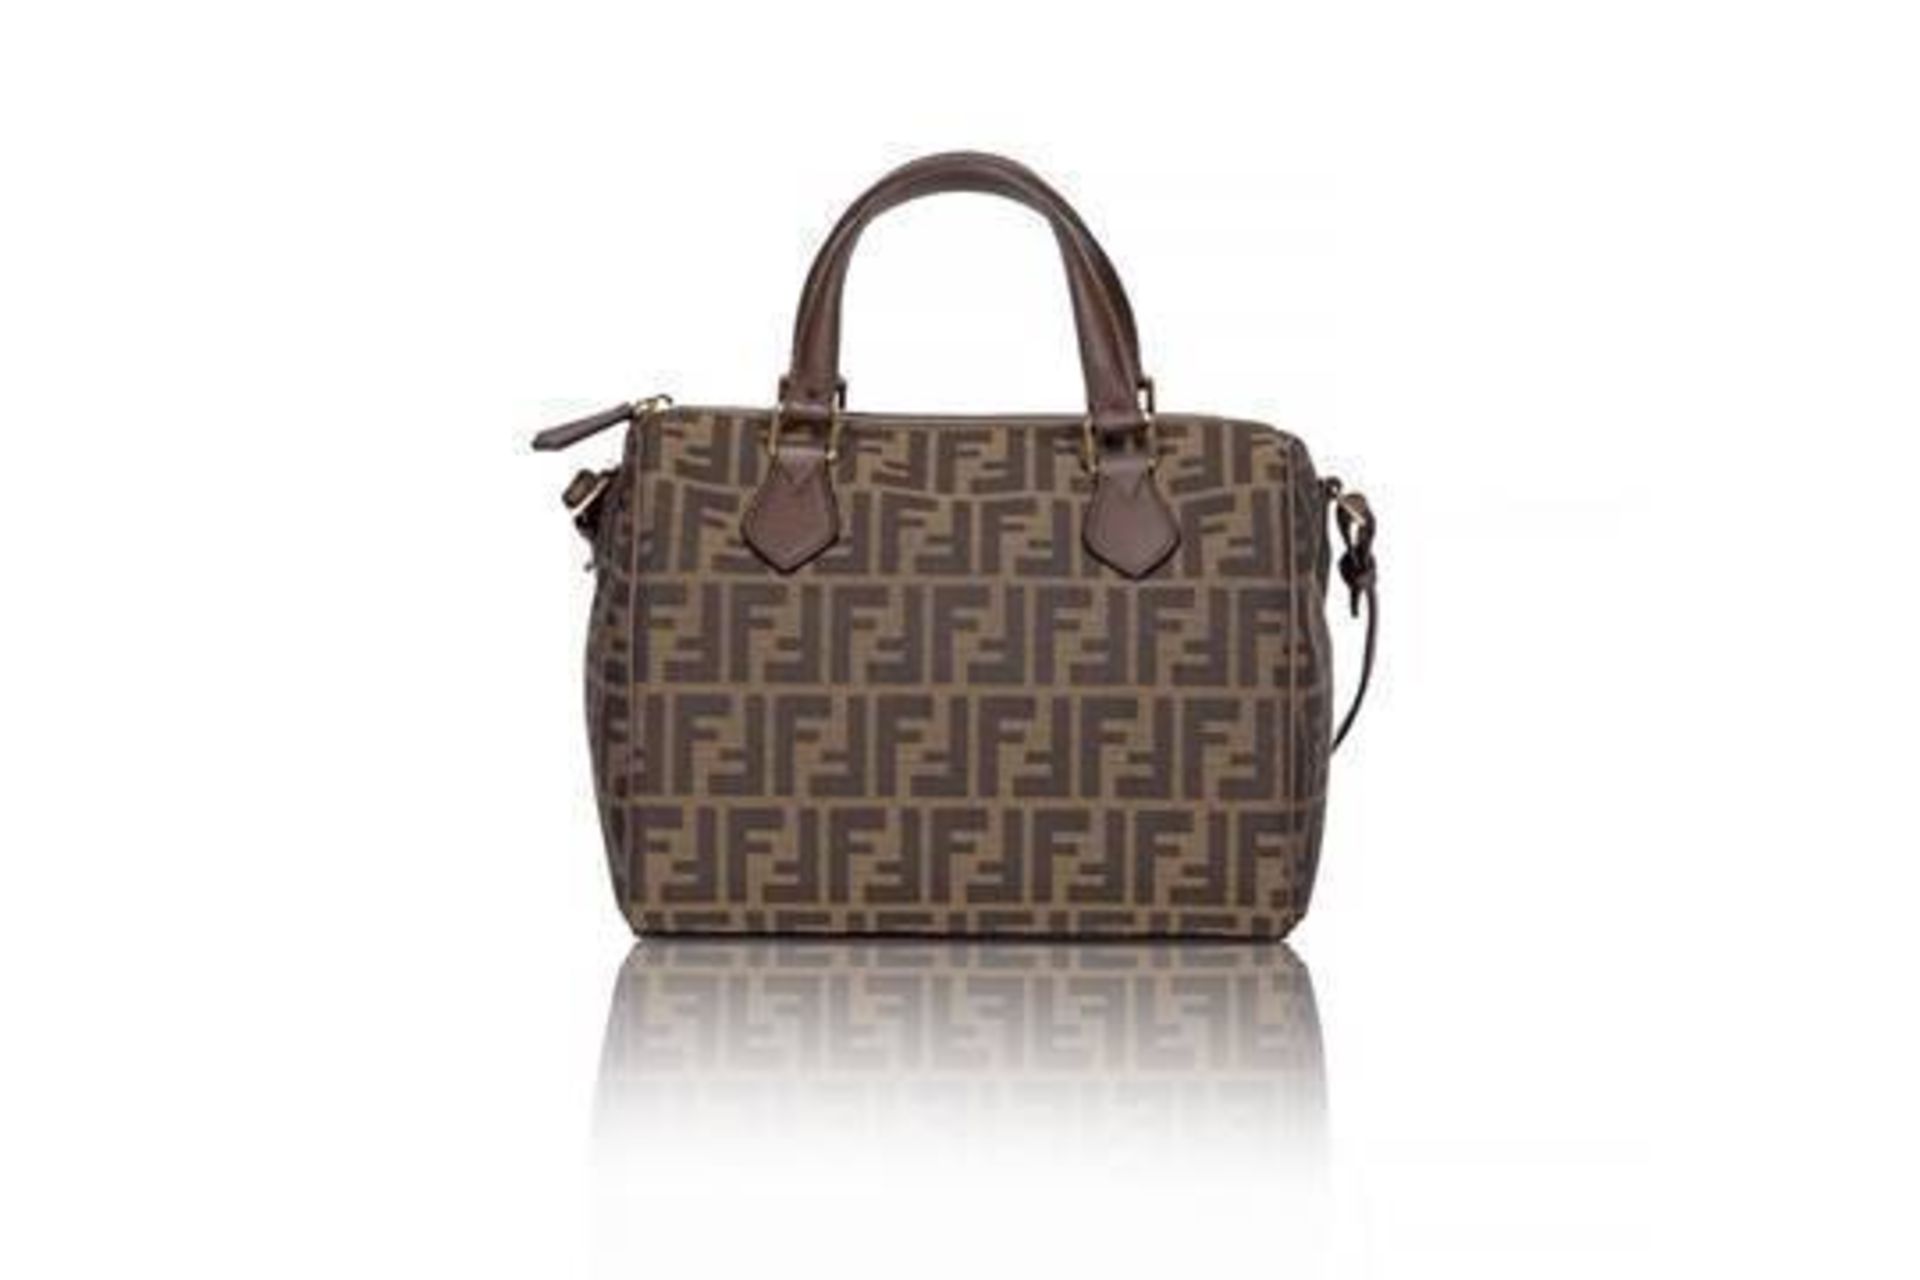 Fendi. Jacquard Bauletto Zucca Boston Bag. Brand New. Brown Canvas & Leather. RRP £884. (8BL121) Top